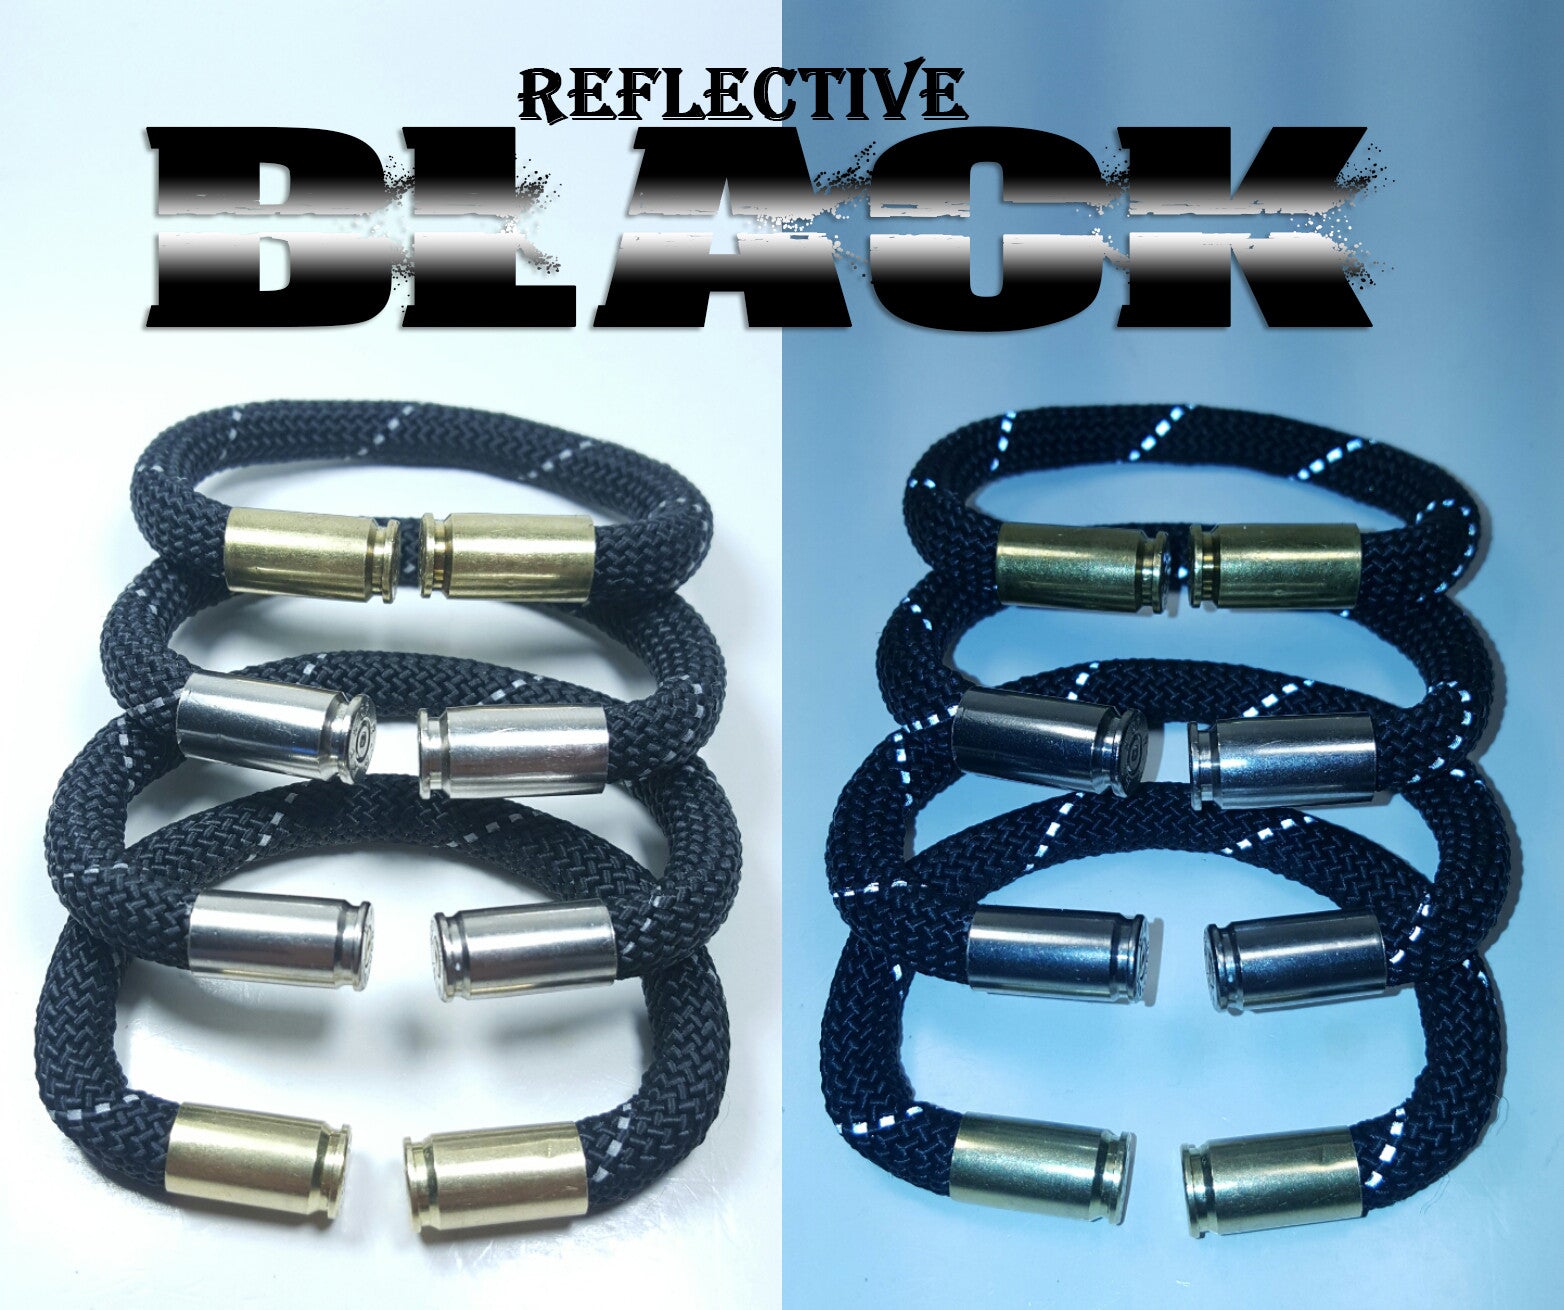 reflective black original beararms bullet casings bracelet jewelry